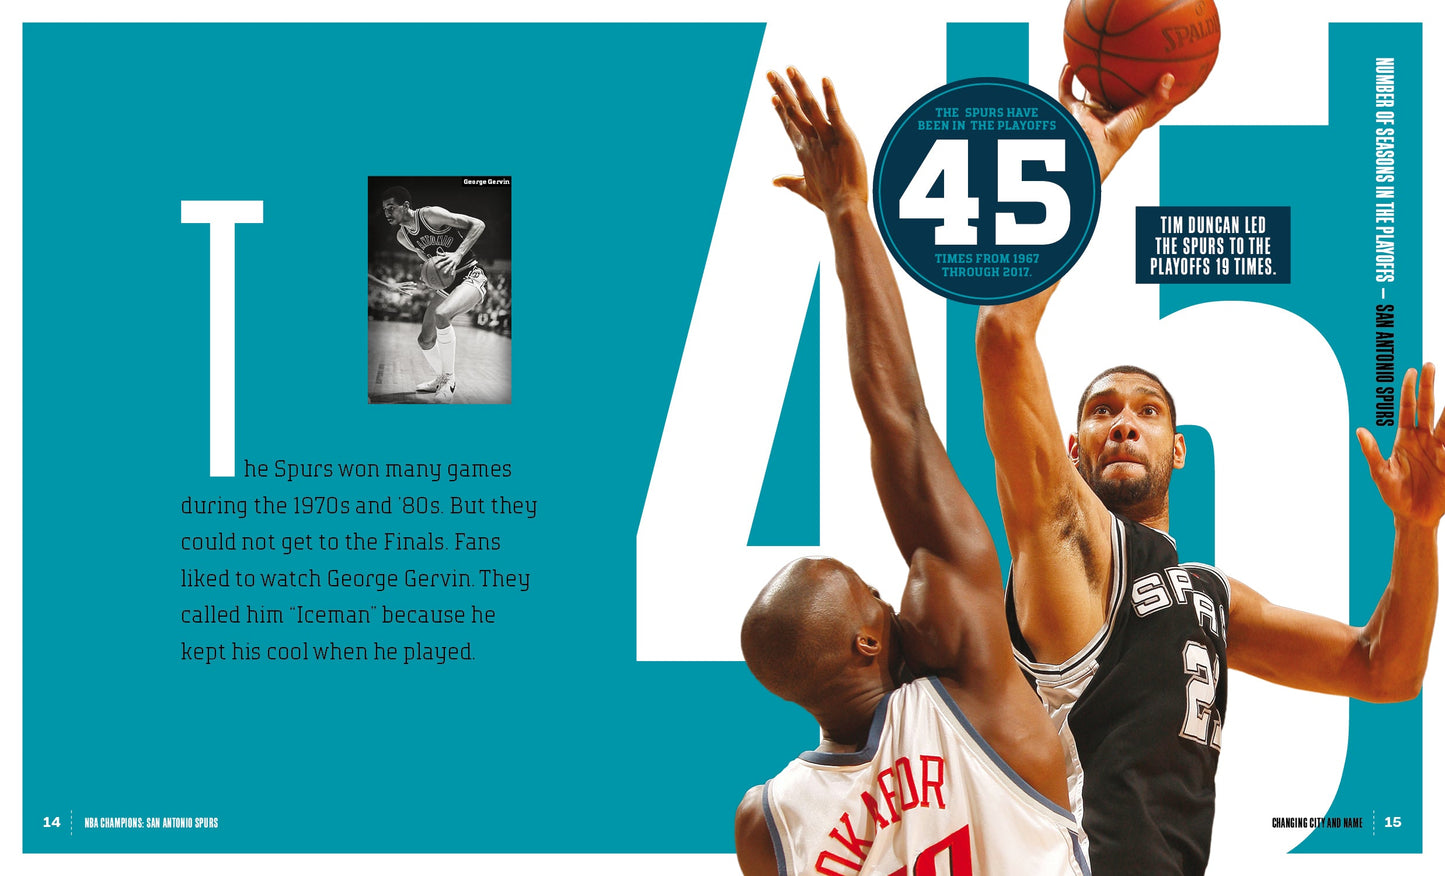 NBA Champions: San Antonio Spurs by The Creative Company Shop